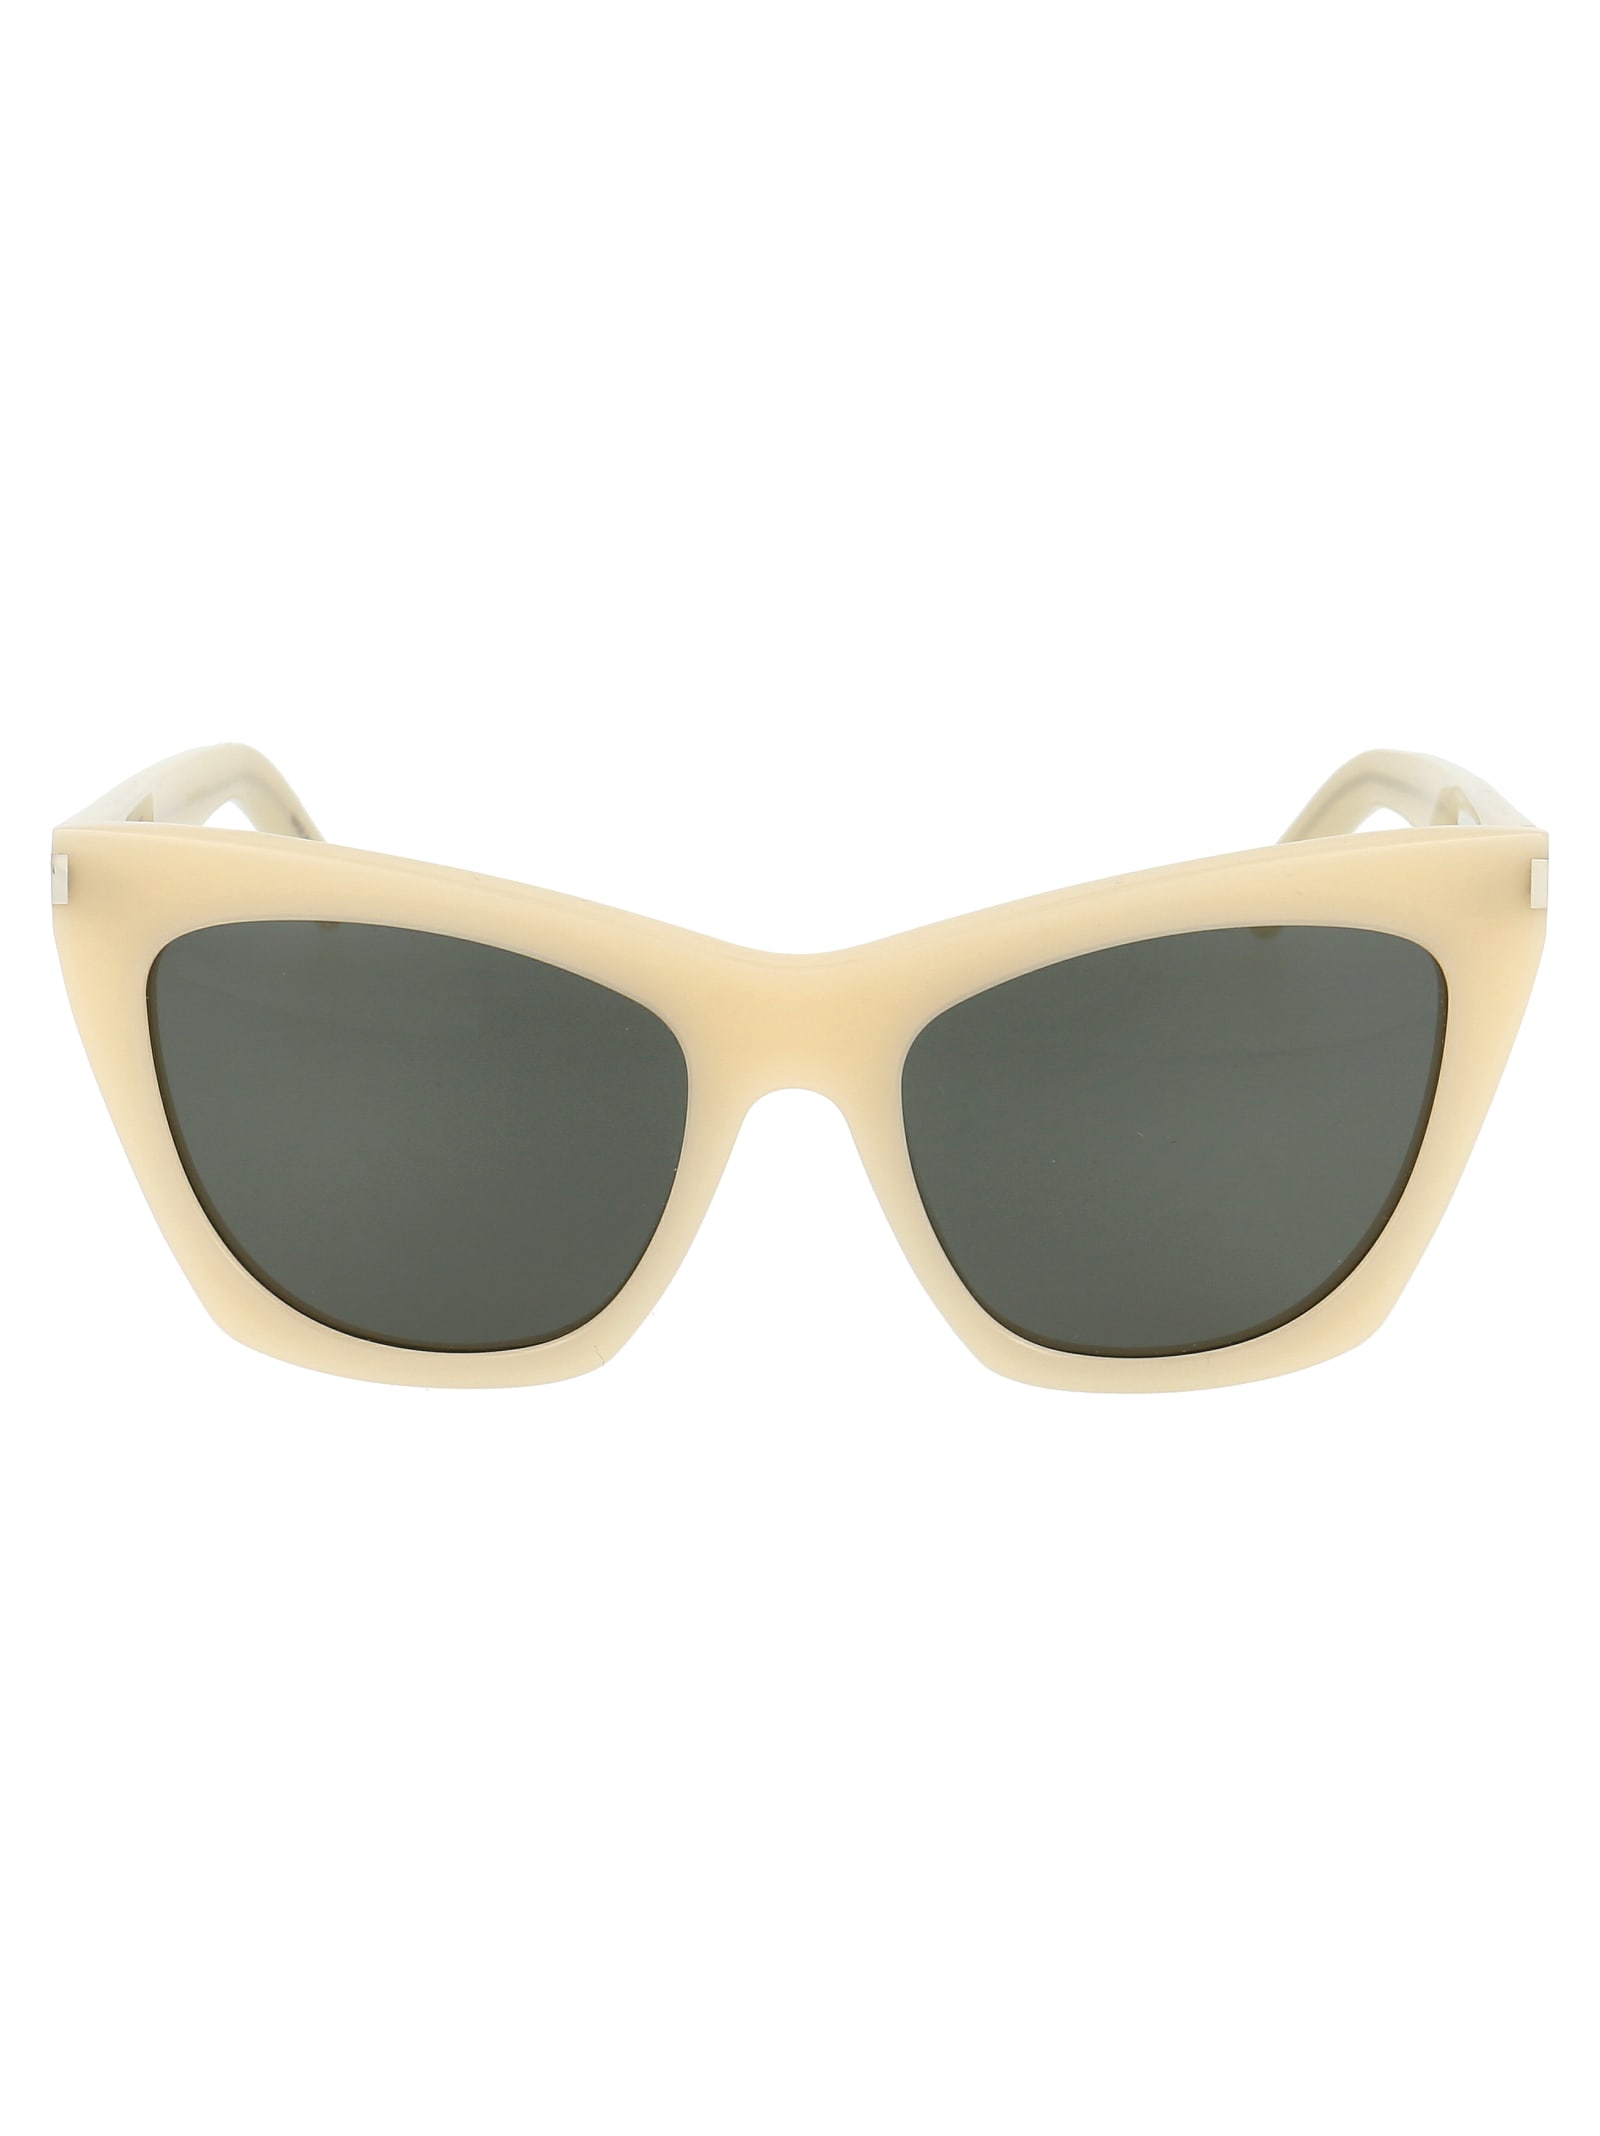 Saint Laurent Sunglasses In Ivory Ivory Grey